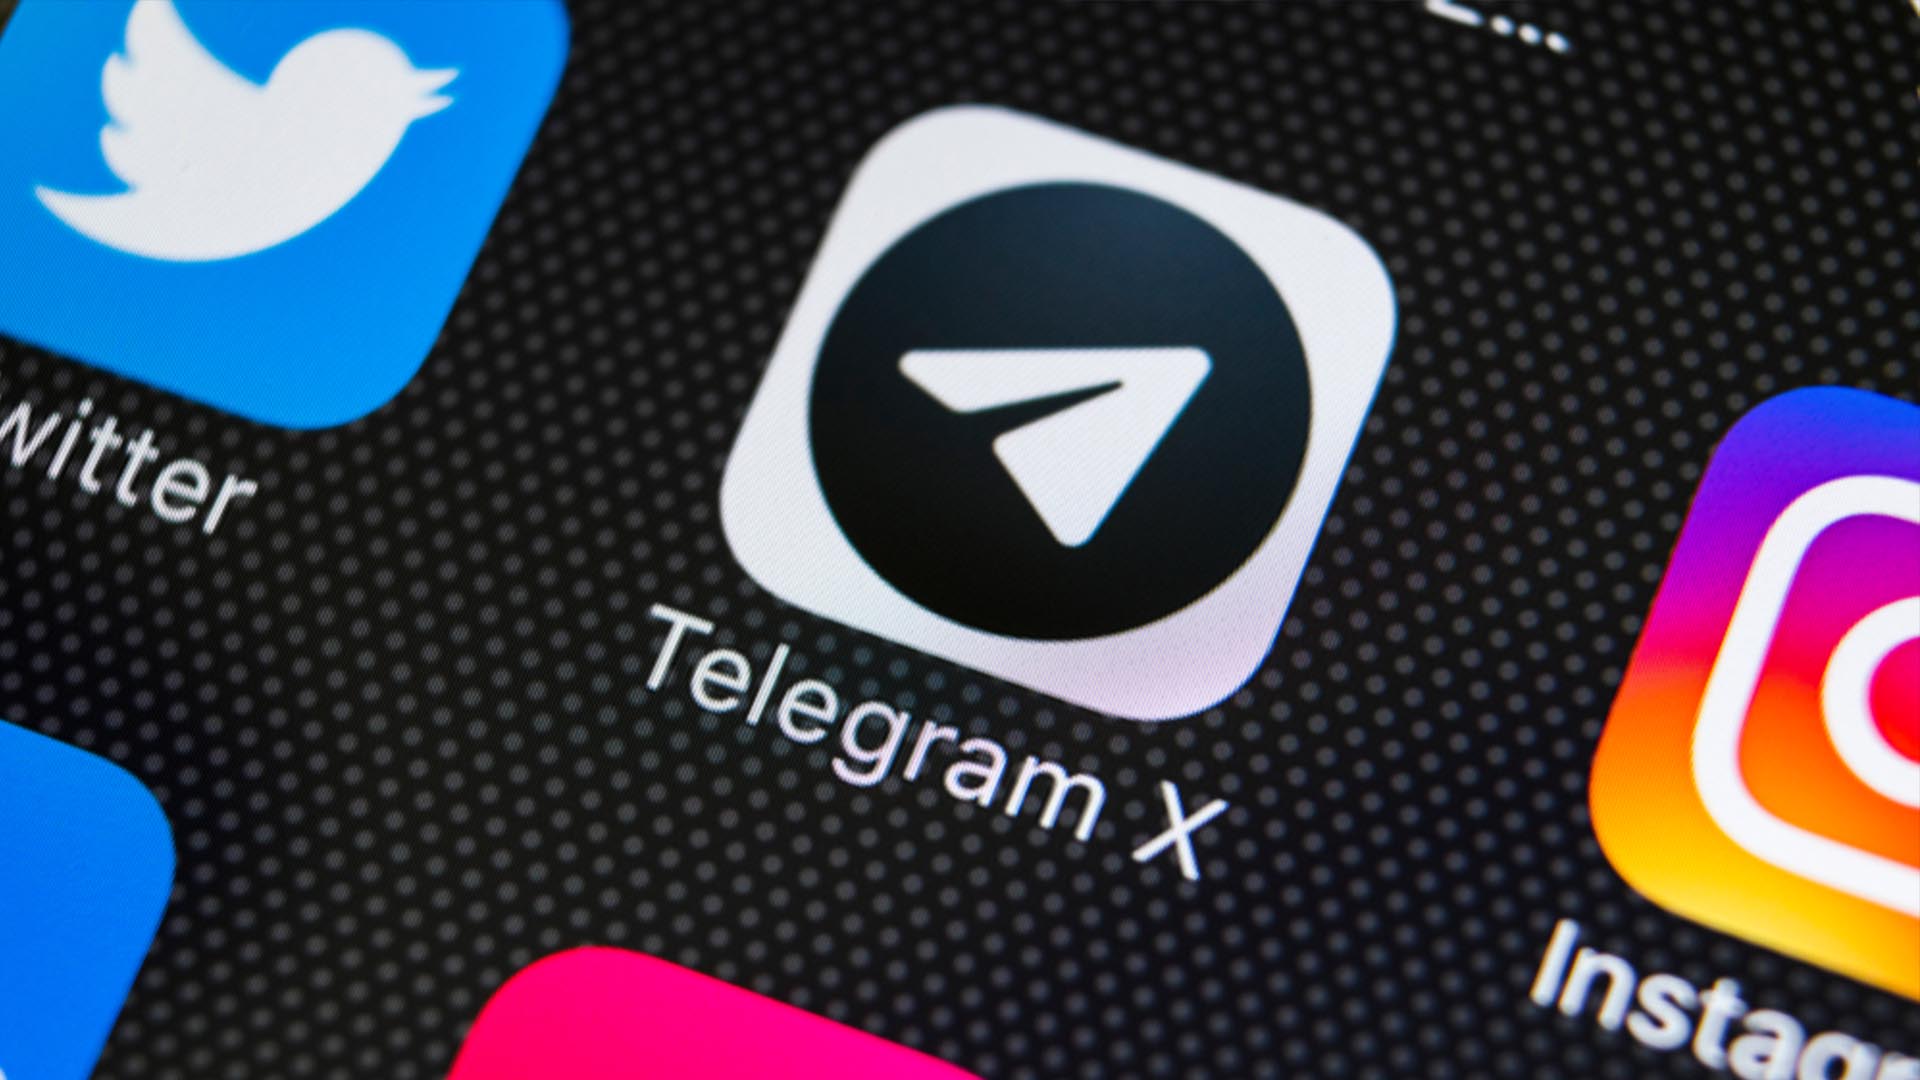 telegram x